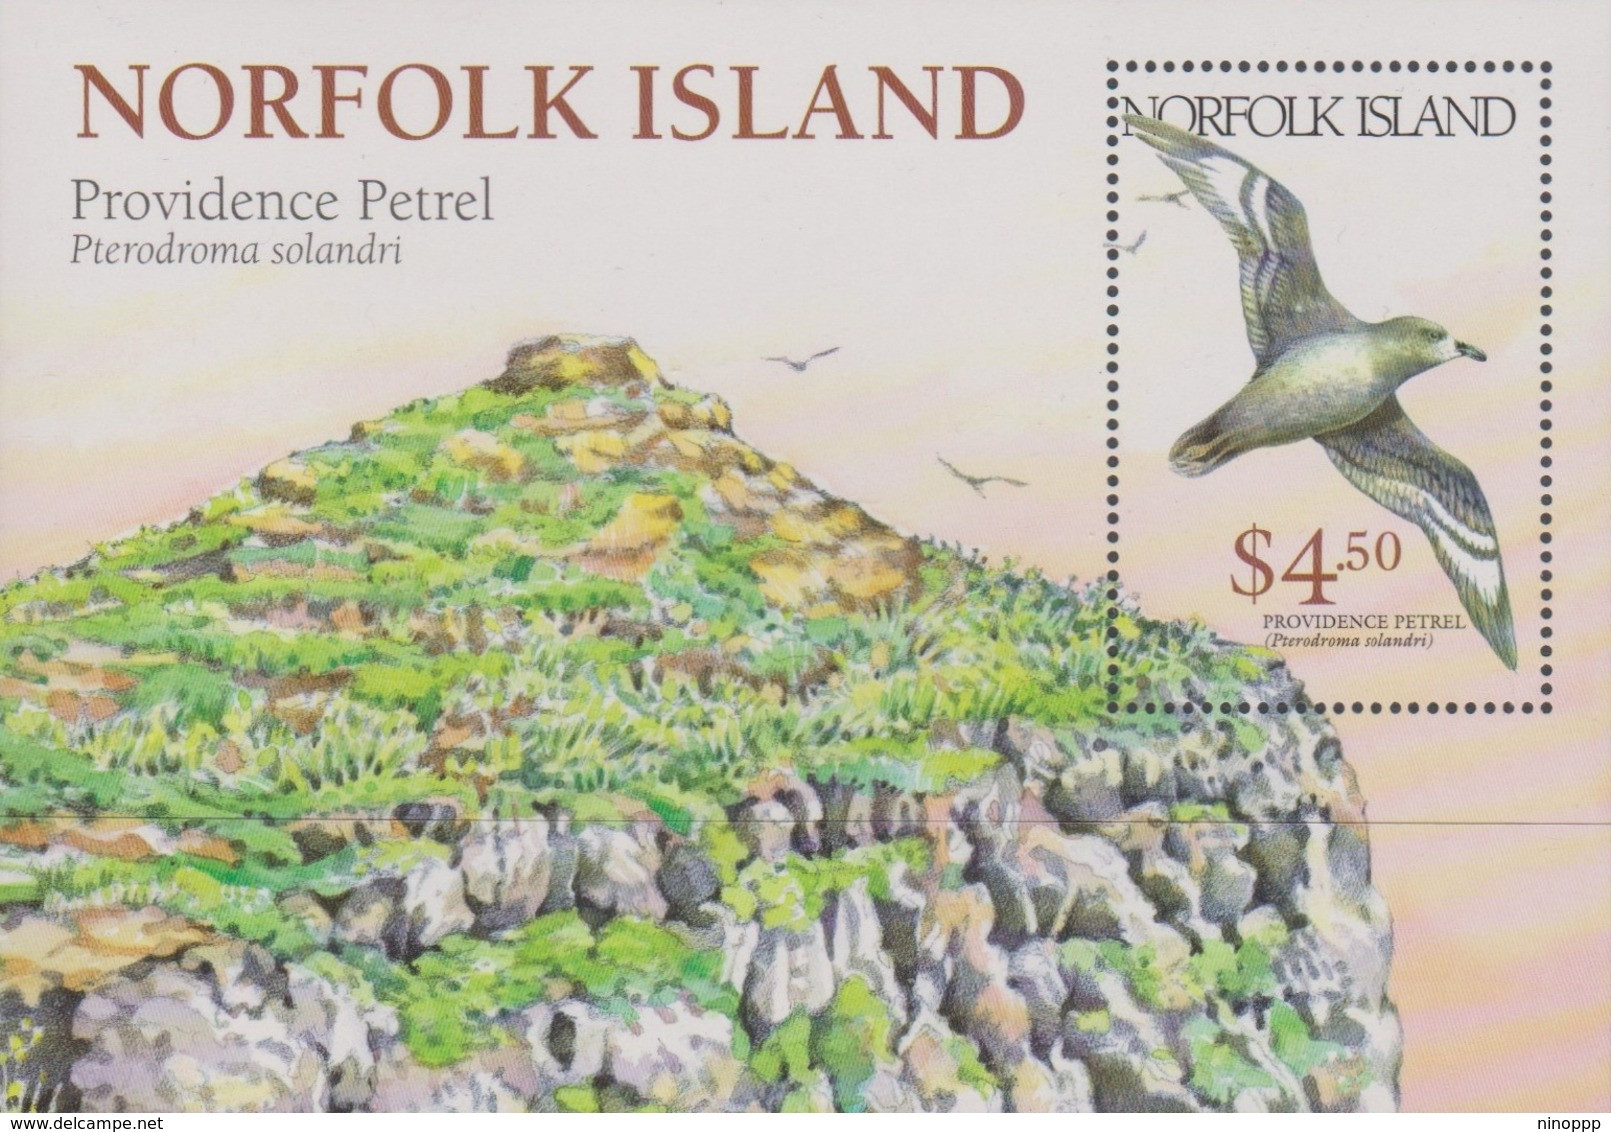 Norfolk Island ASC 689 MS 1999 Providence Petrel, Miniature Sheet, Mint Never Hinged - Isla Norfolk